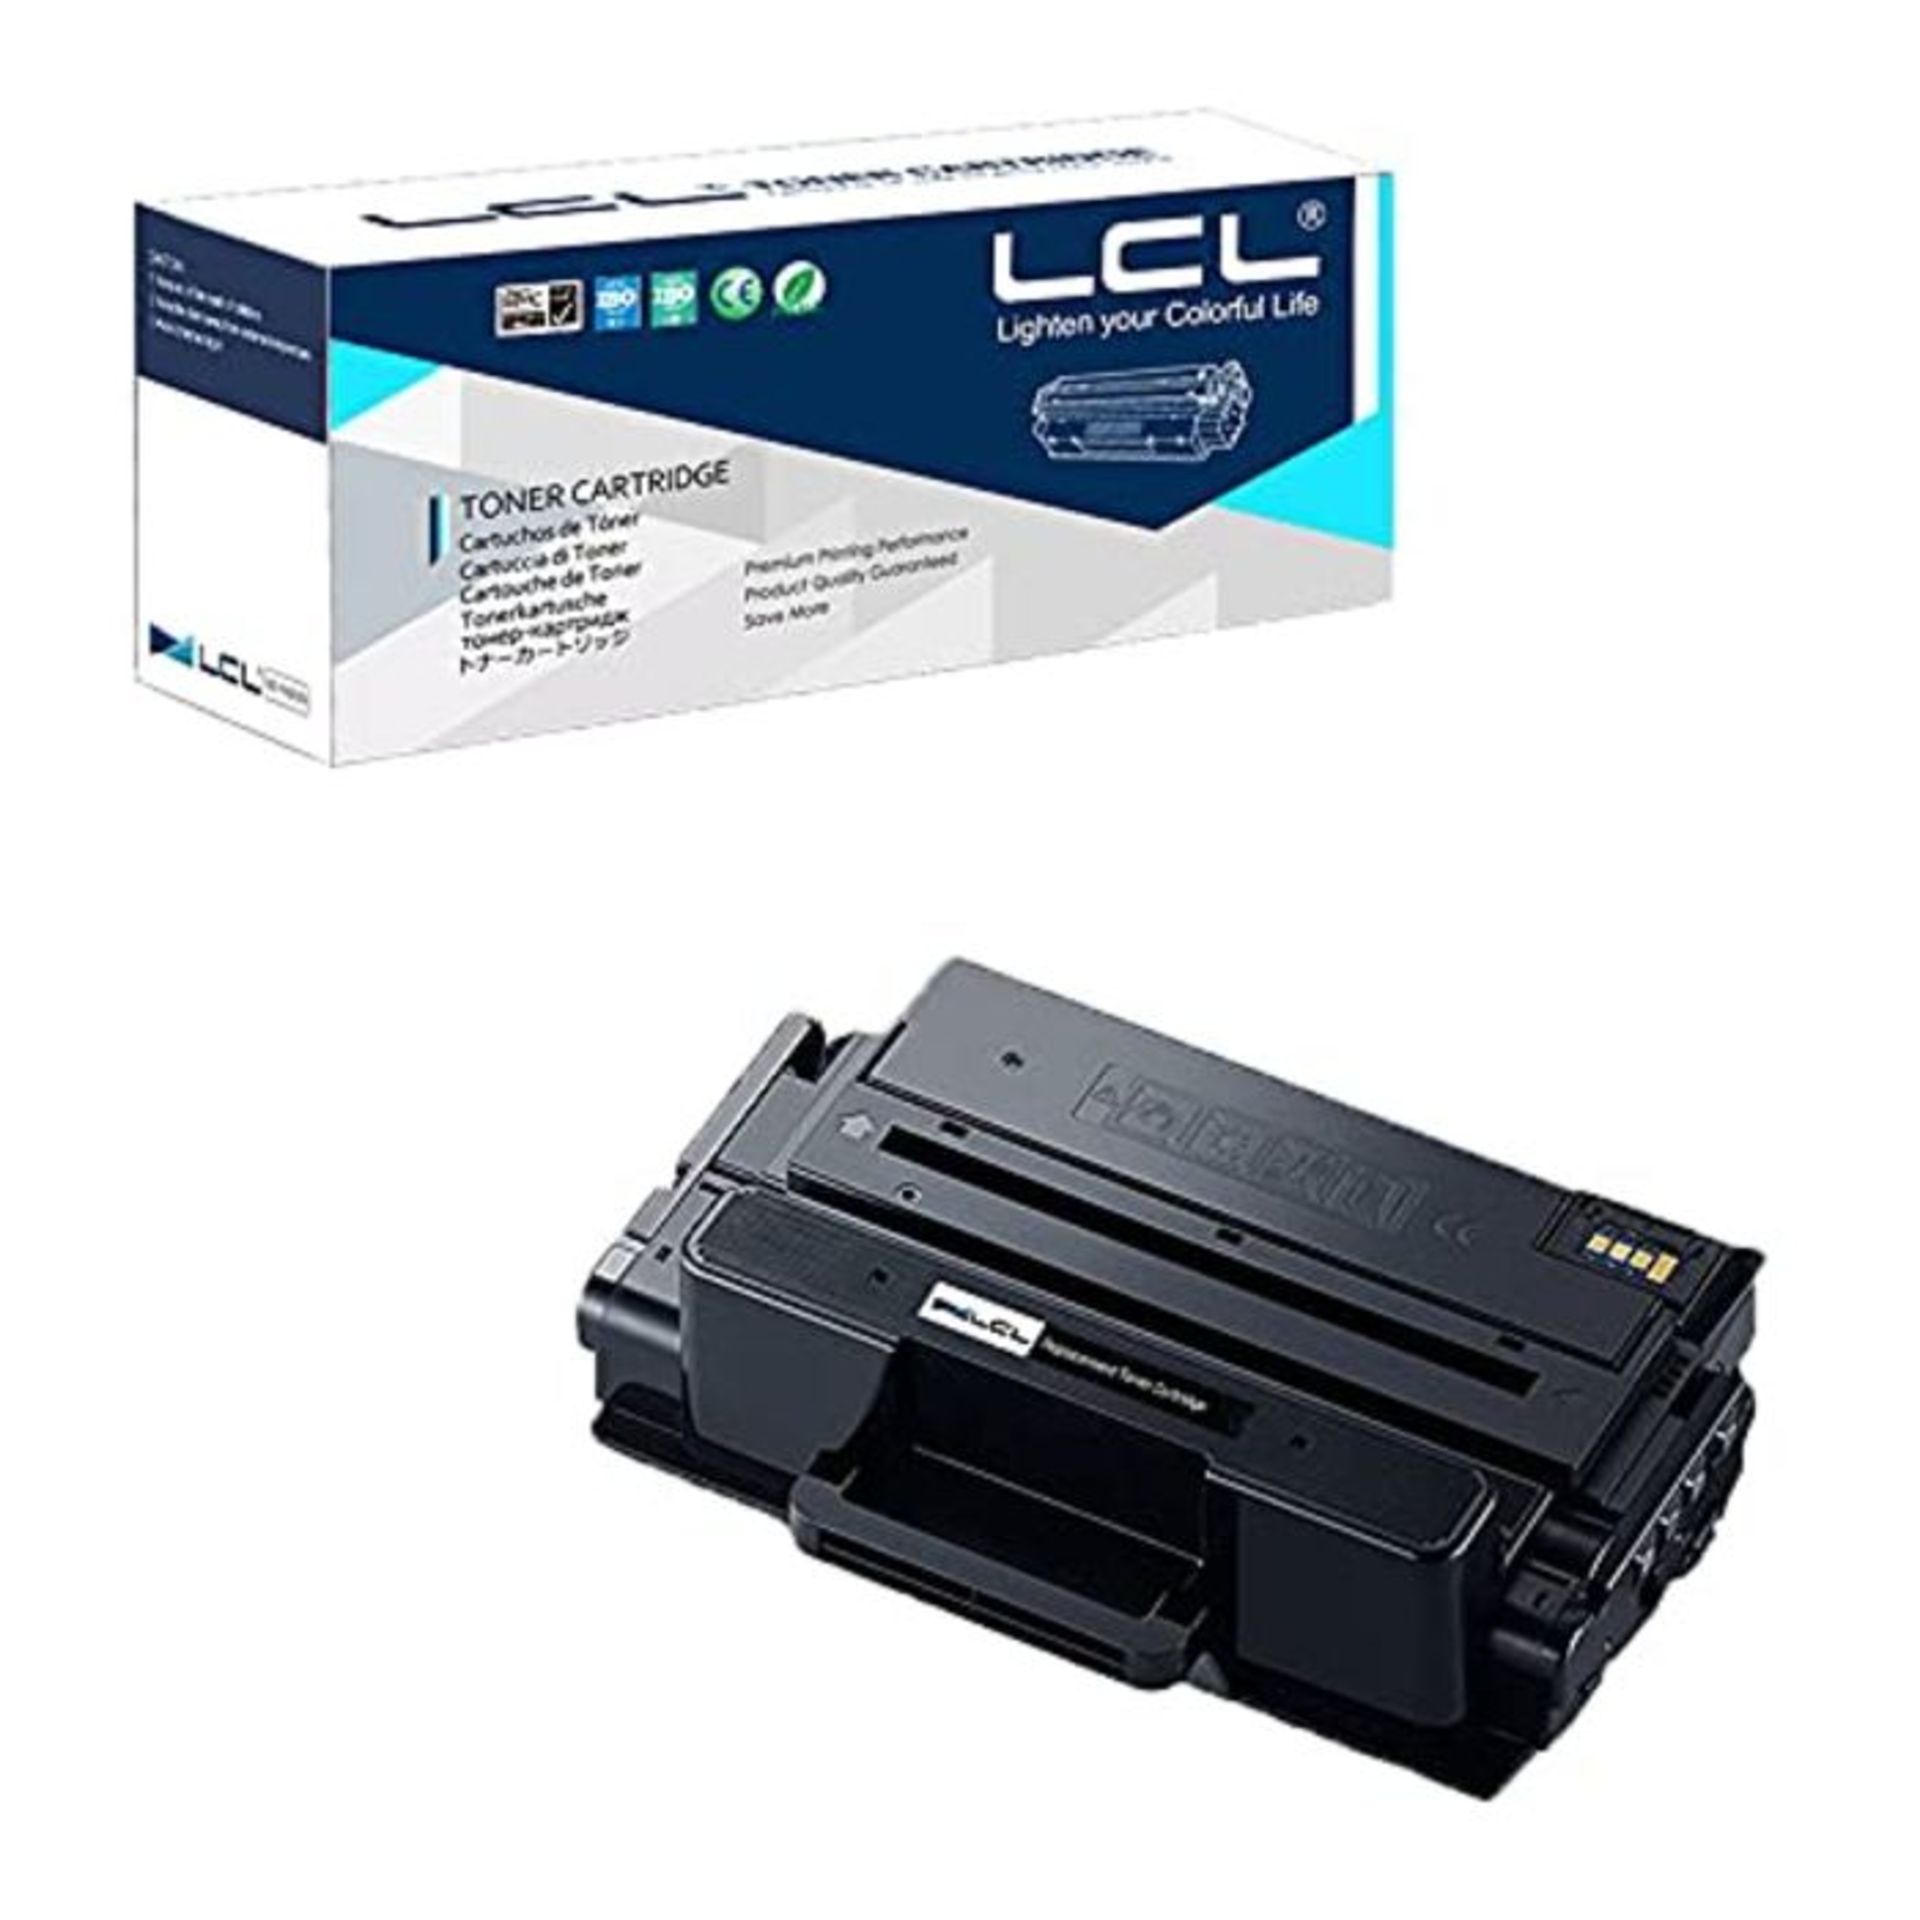 LCL Compatible Toner Cartridge MLT-D203E 10000 pages (1 Black) Replacement for Samsung